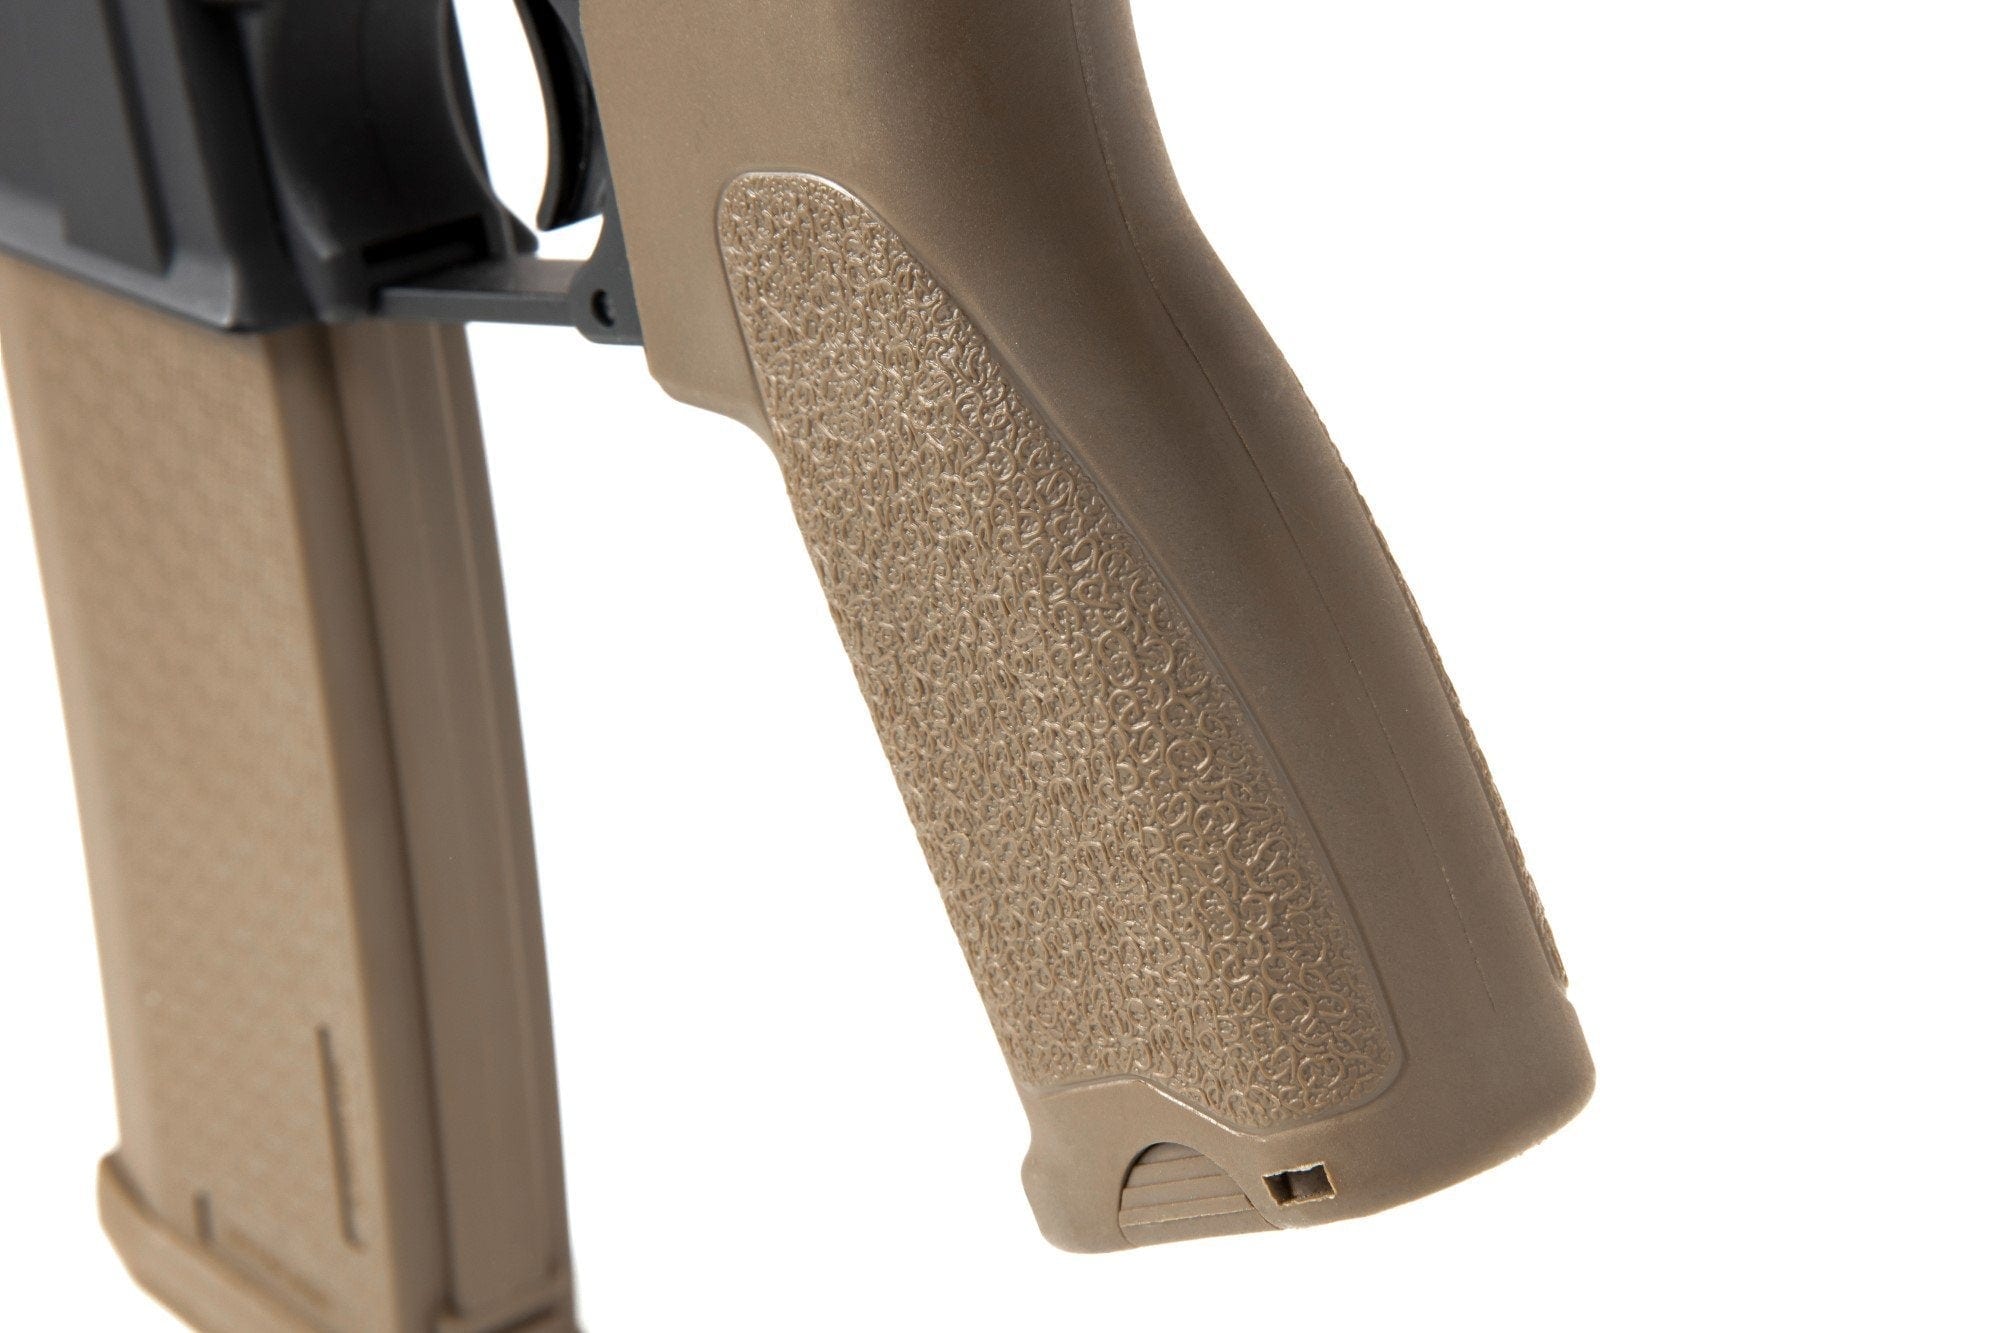 RRA SA-E08 EDGE ™ carbine replica - Half-Tan by Specna Arms on Airsoft Mania Europe